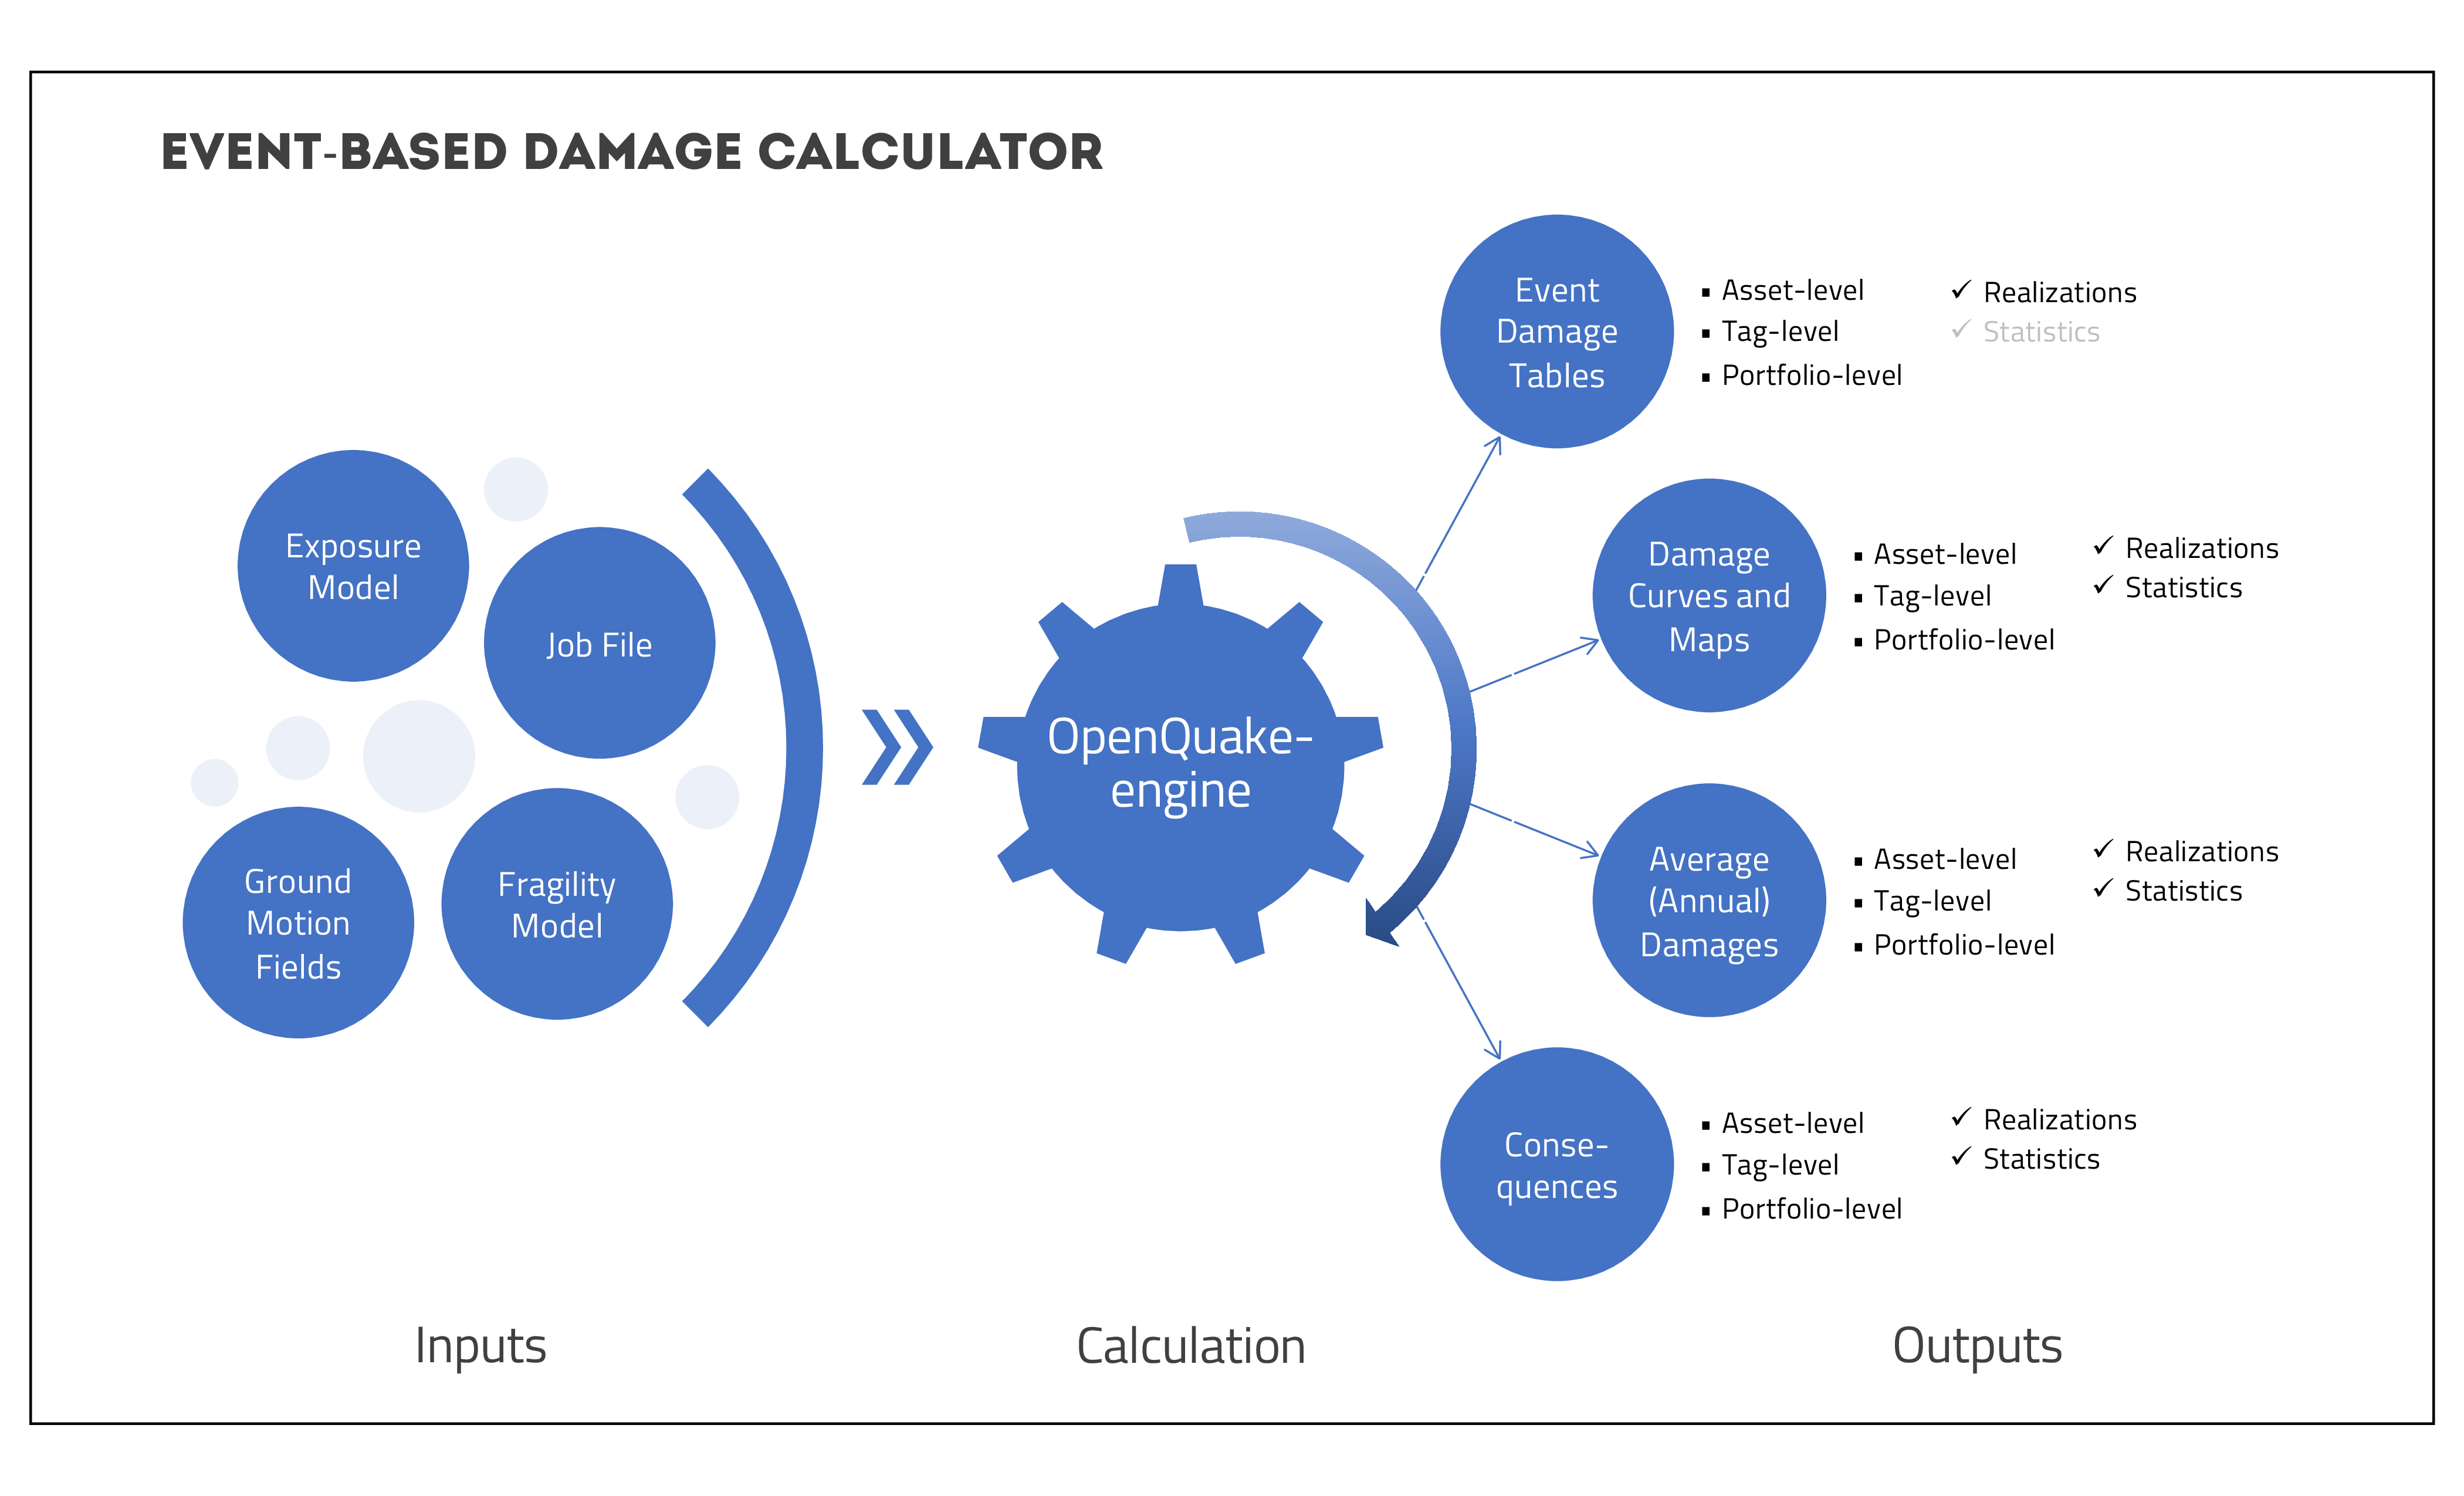 Probabilistic Event-based Damage Calculator input/output structure.